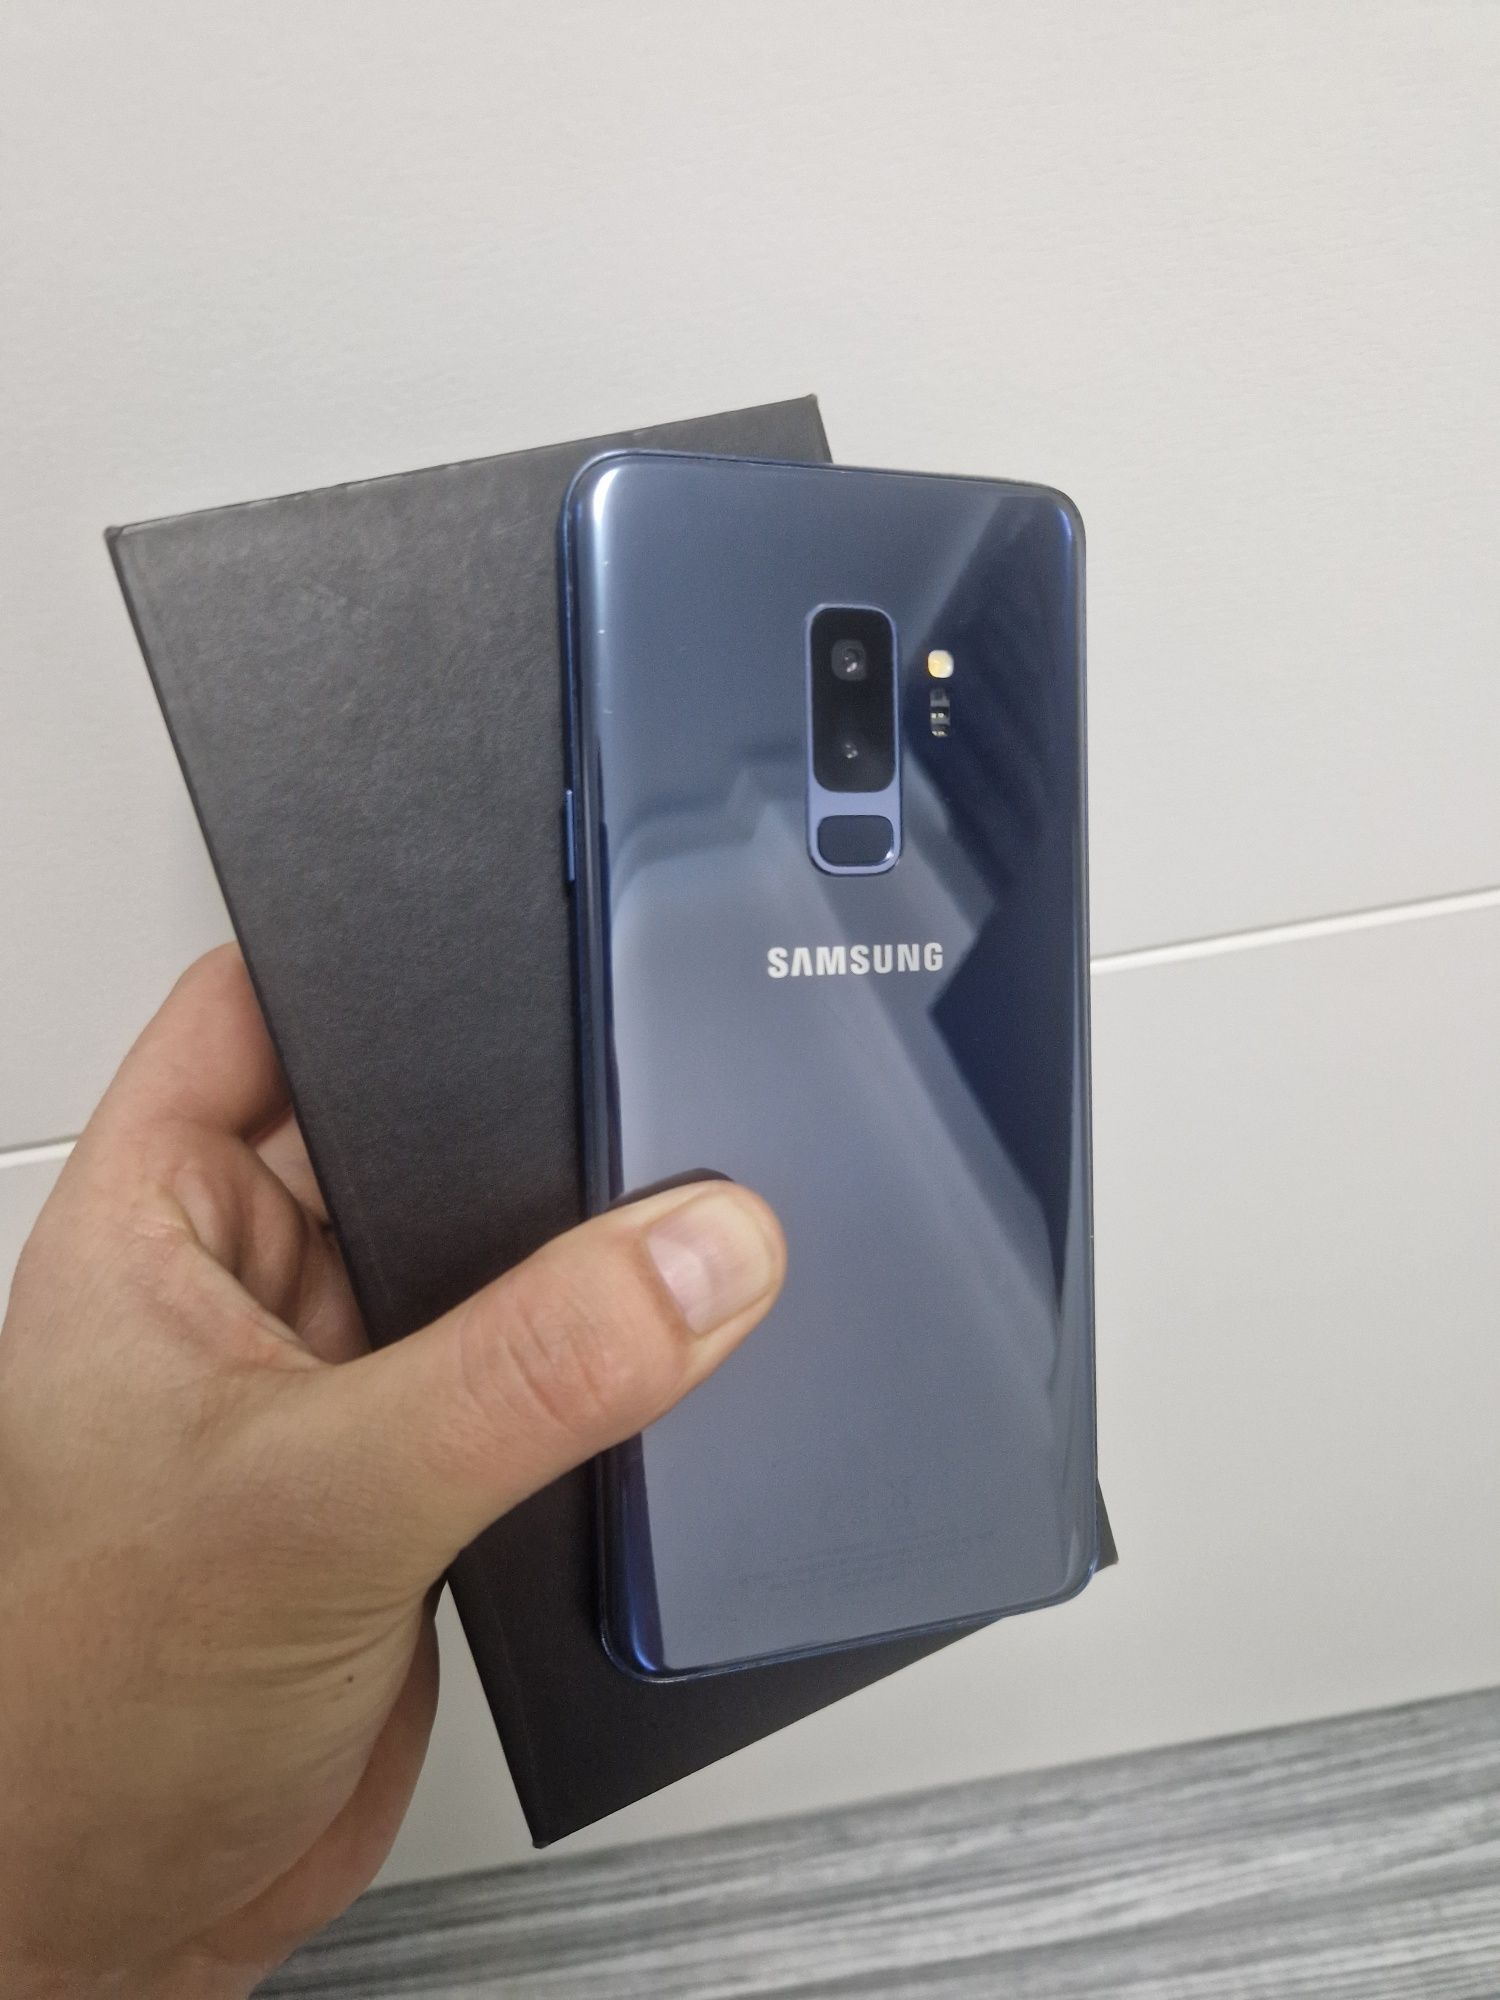 Samsung S9 Plus  / O73O8O56O5